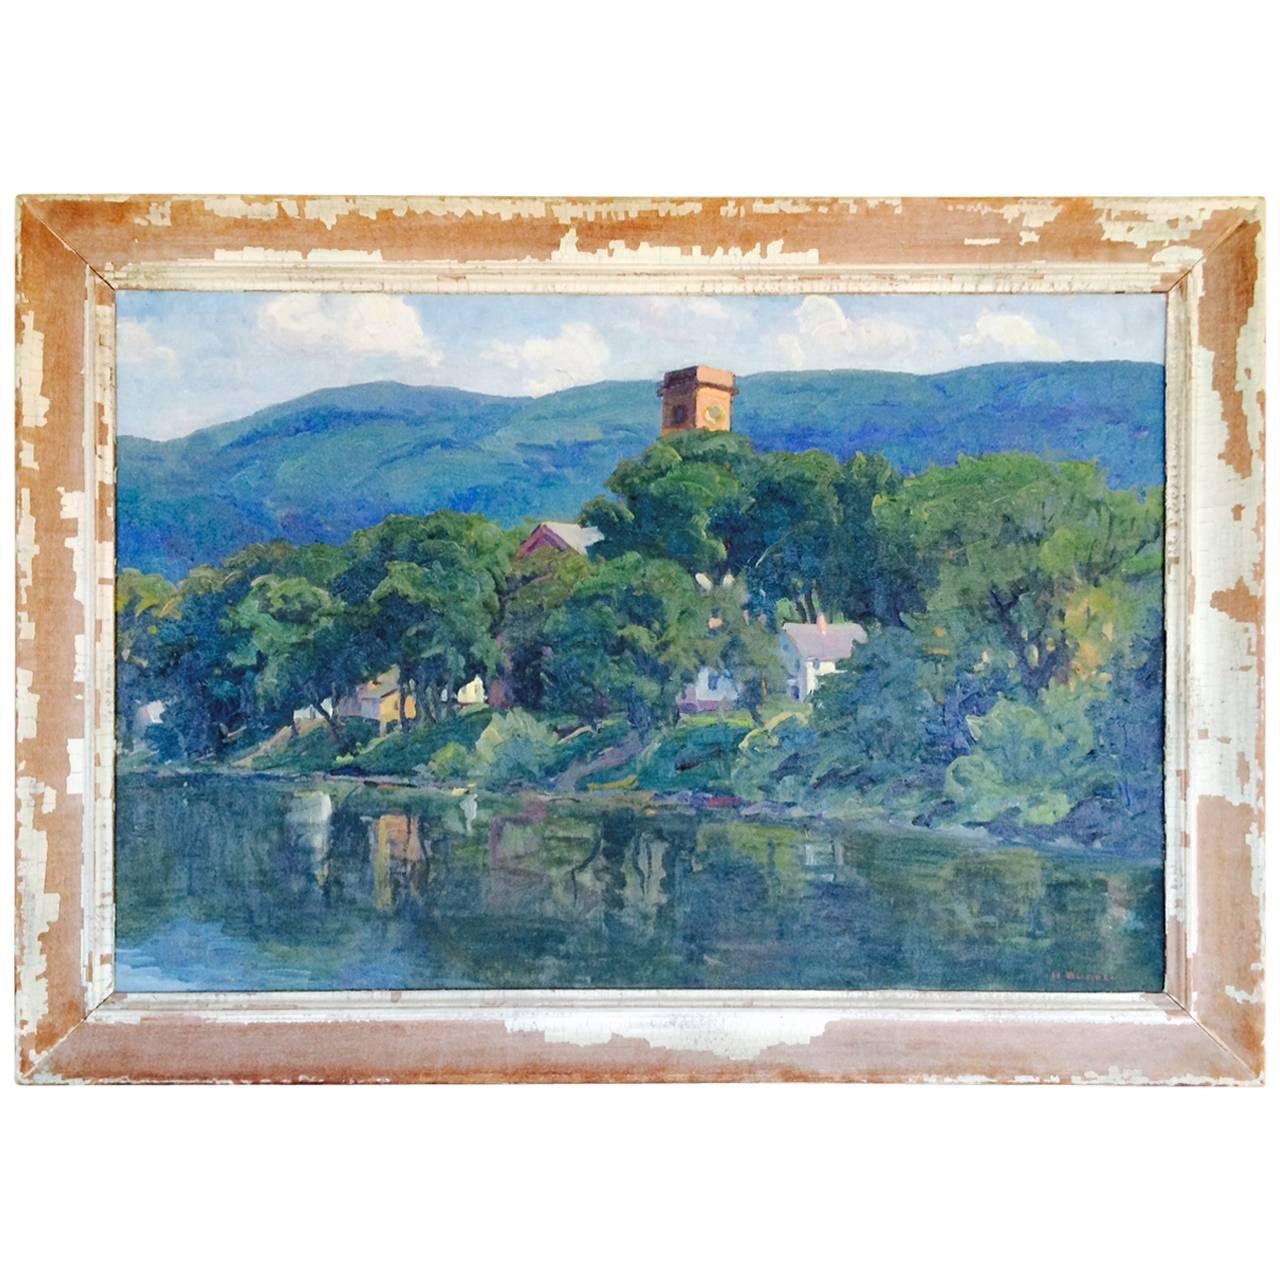 Hortense Budell Oil Painting Titled "River Front, N.J, " 1939